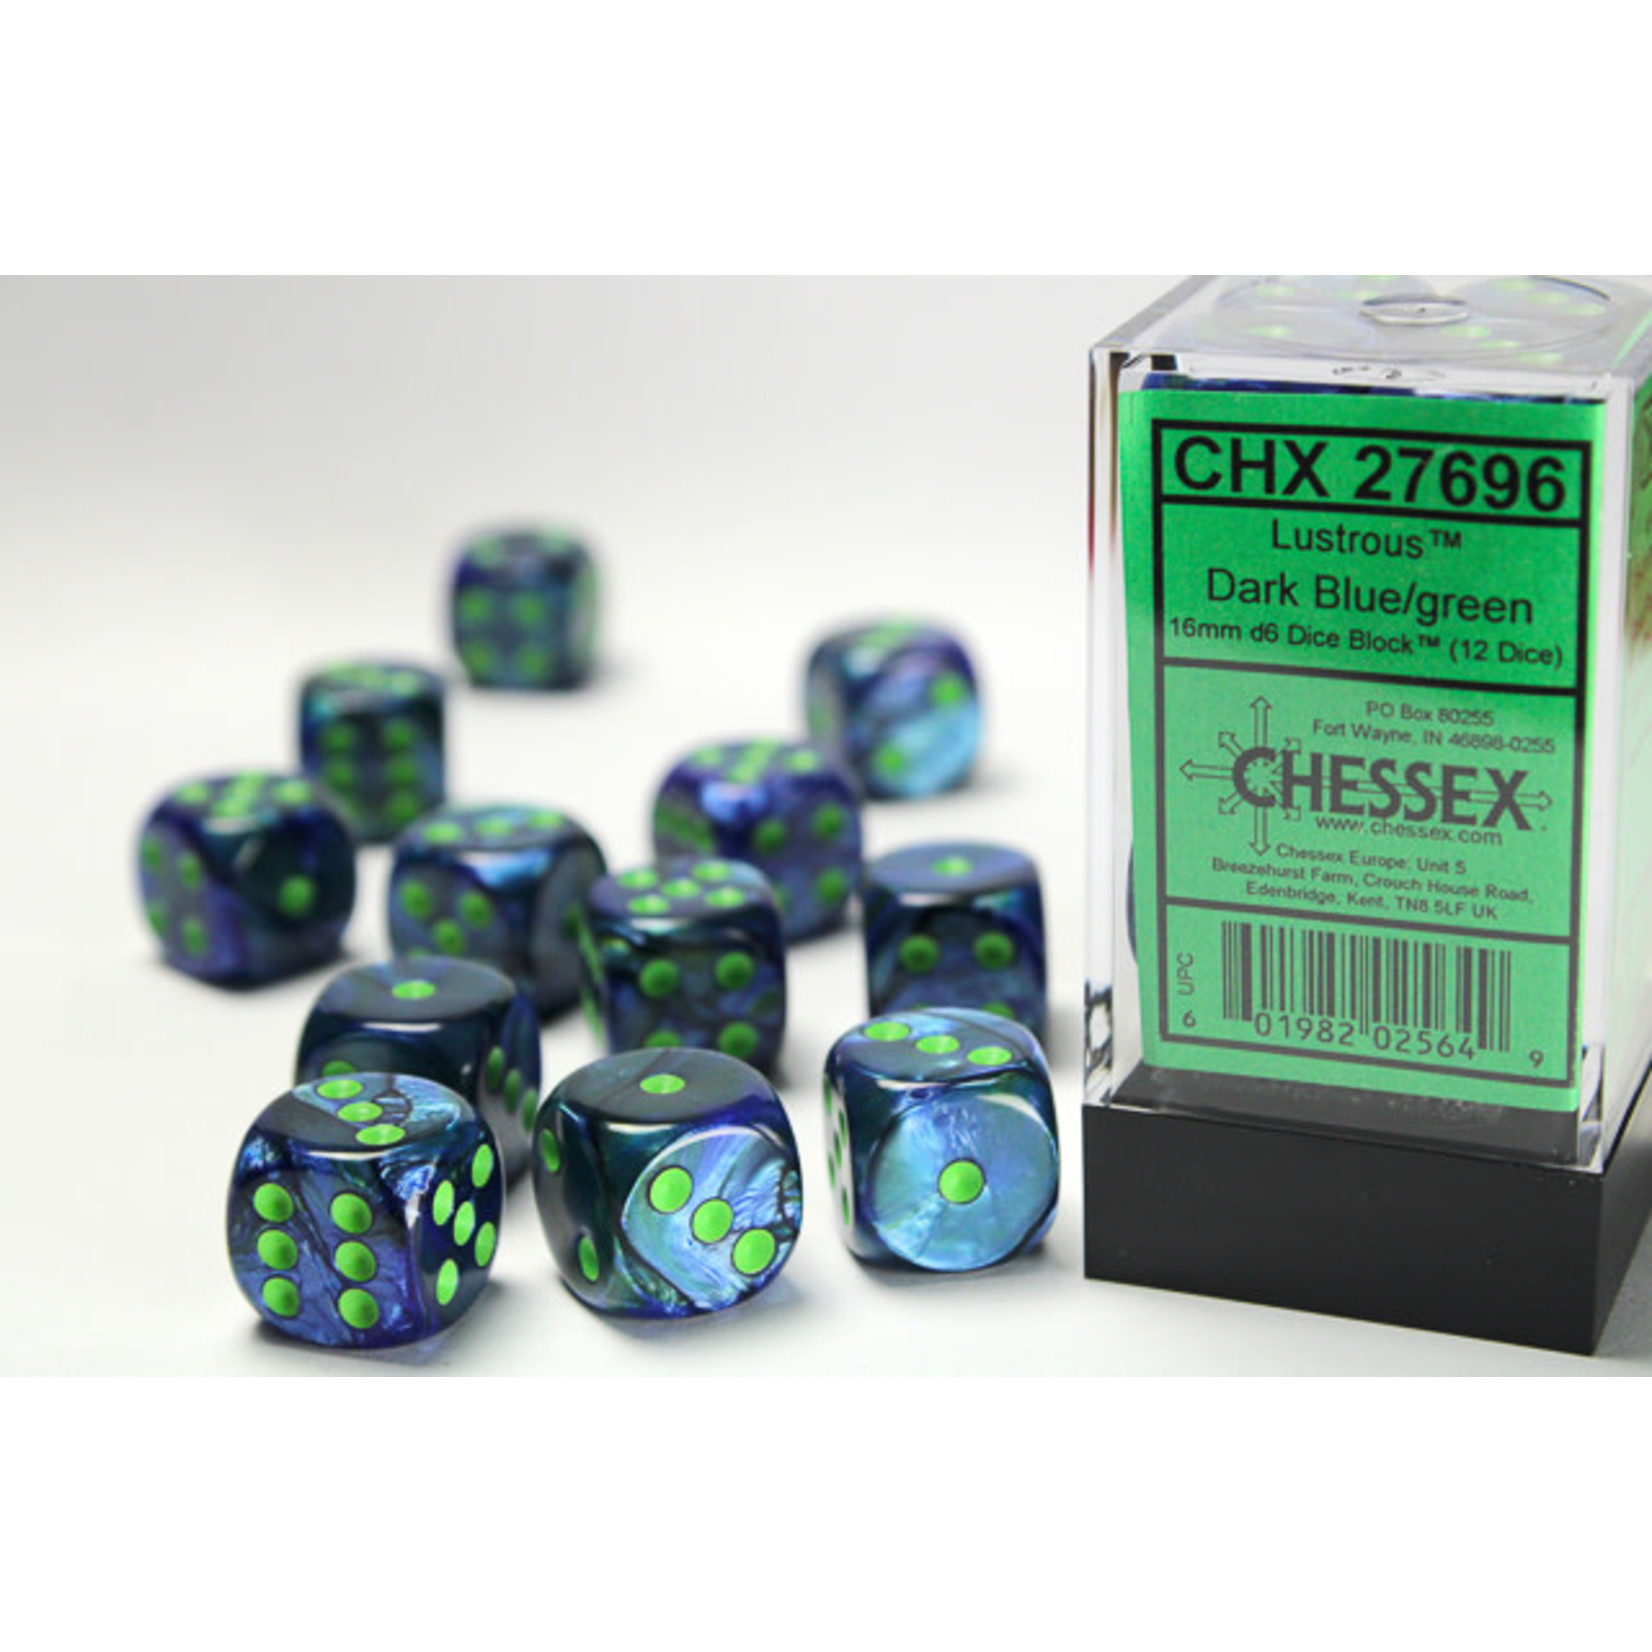 Chessex Dice 16mm 27696 12pc Lustrous Dark Blue/Green - CompuSoft 